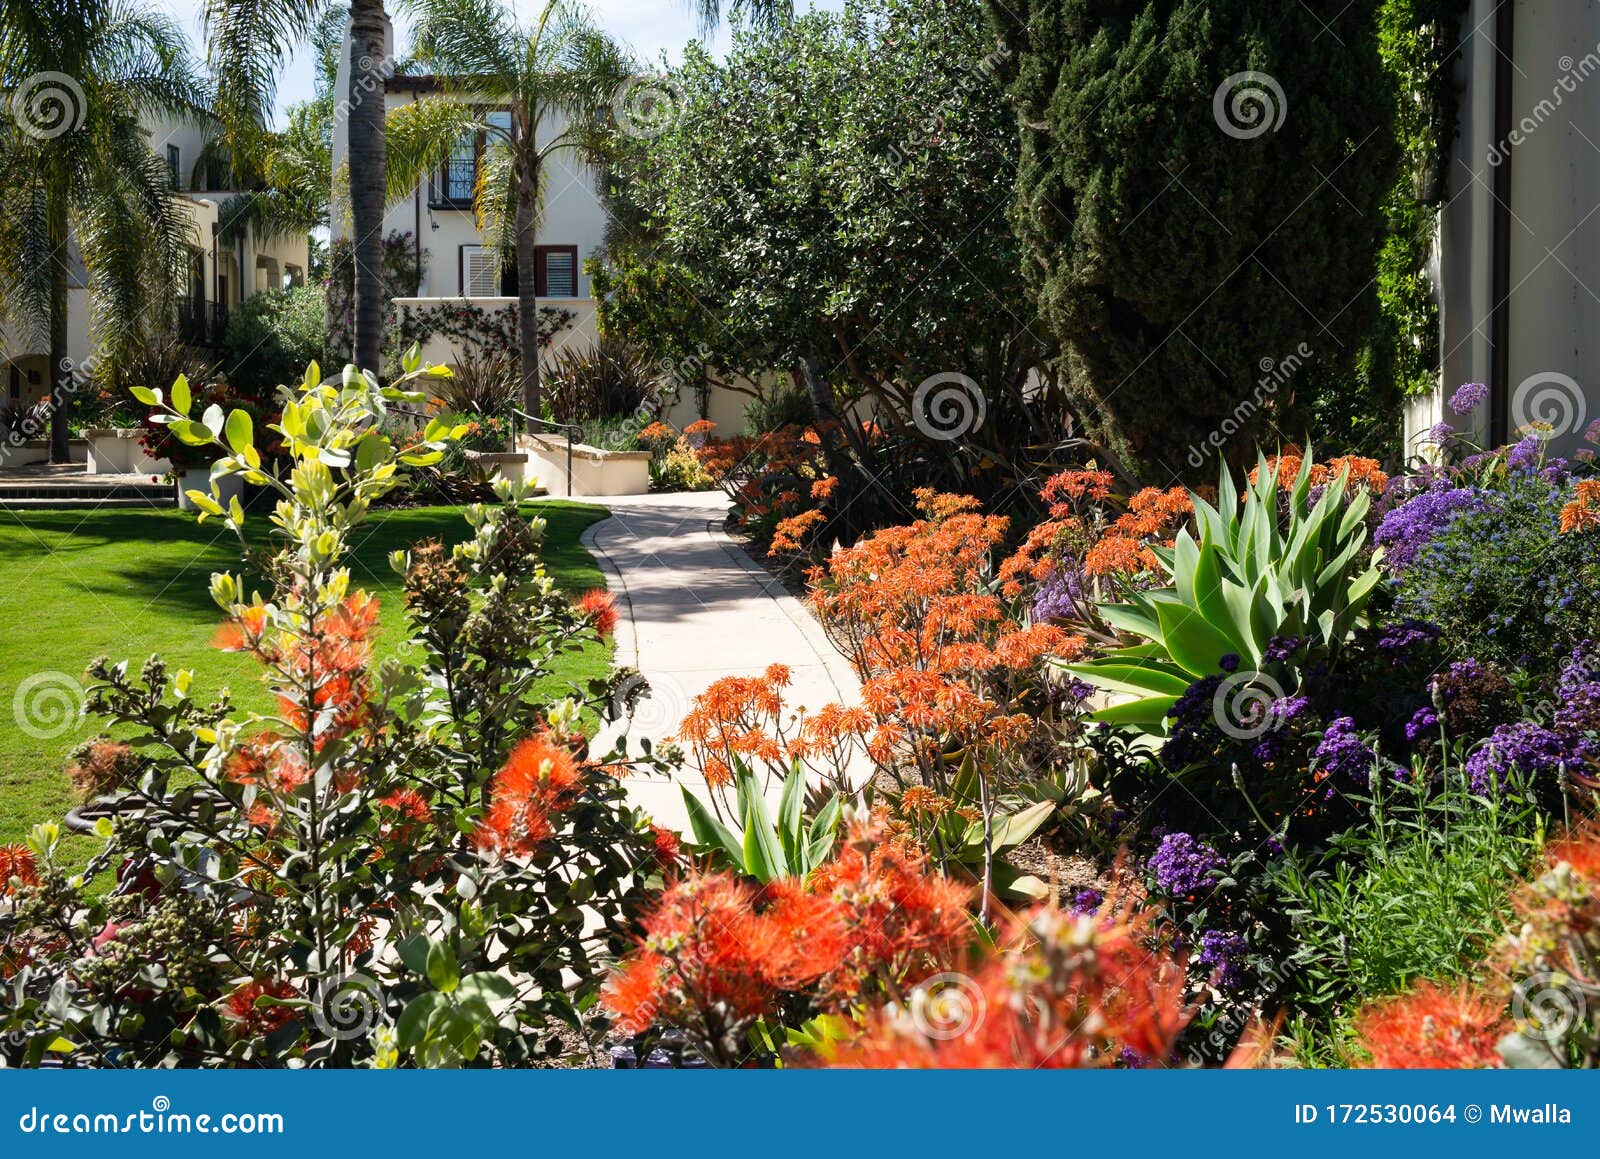 california residential landscaping